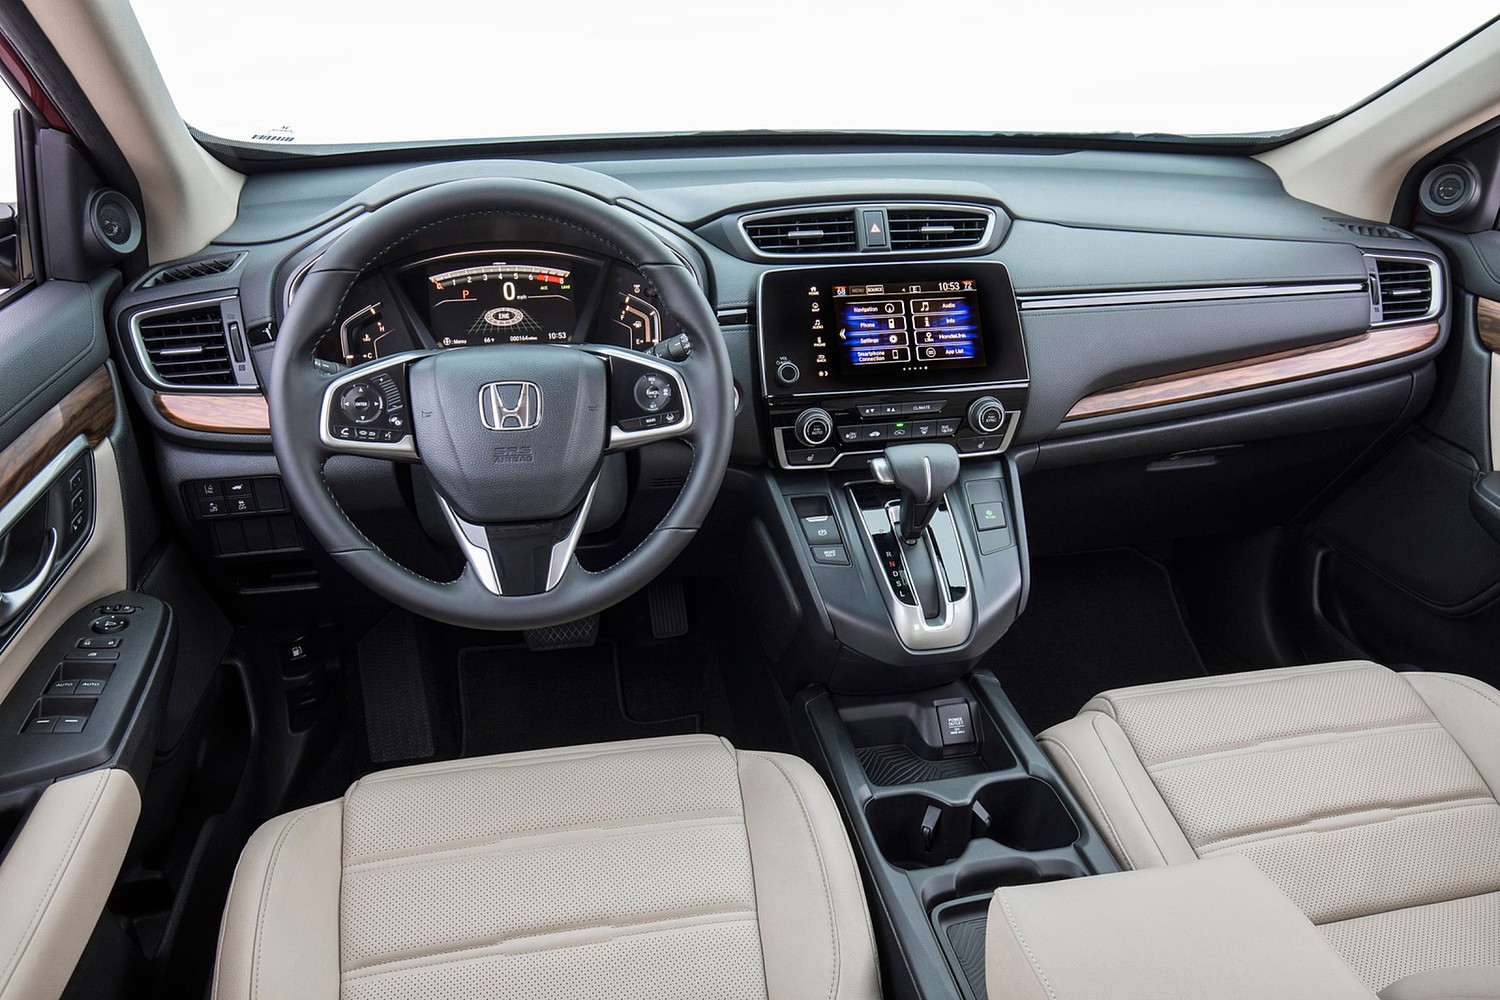 Honda CR-V Touring 4dr SUV Dashboard (2017 model year shown)